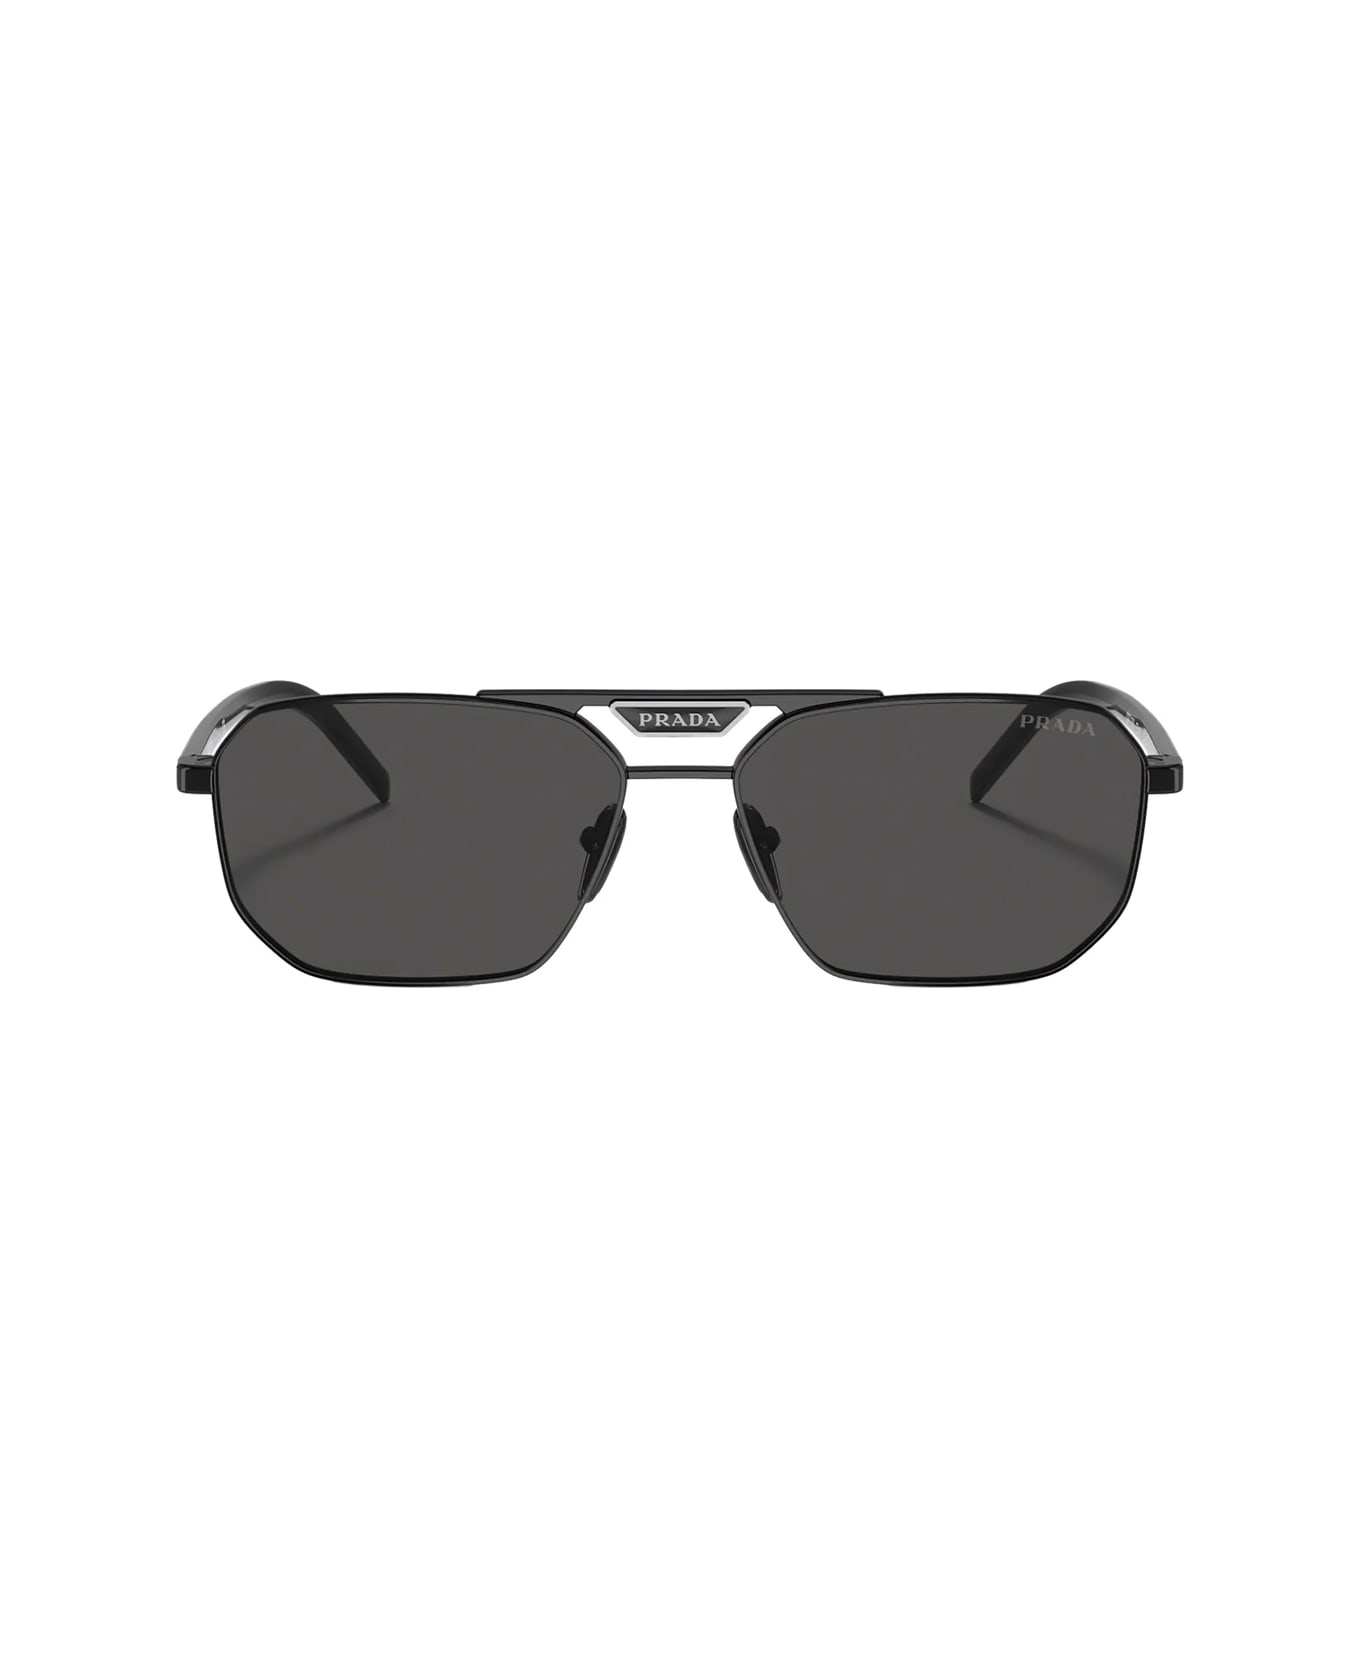 Prada Eyewear Pr 58ys 1ab5s0 Sunglasses - Nero サングラス